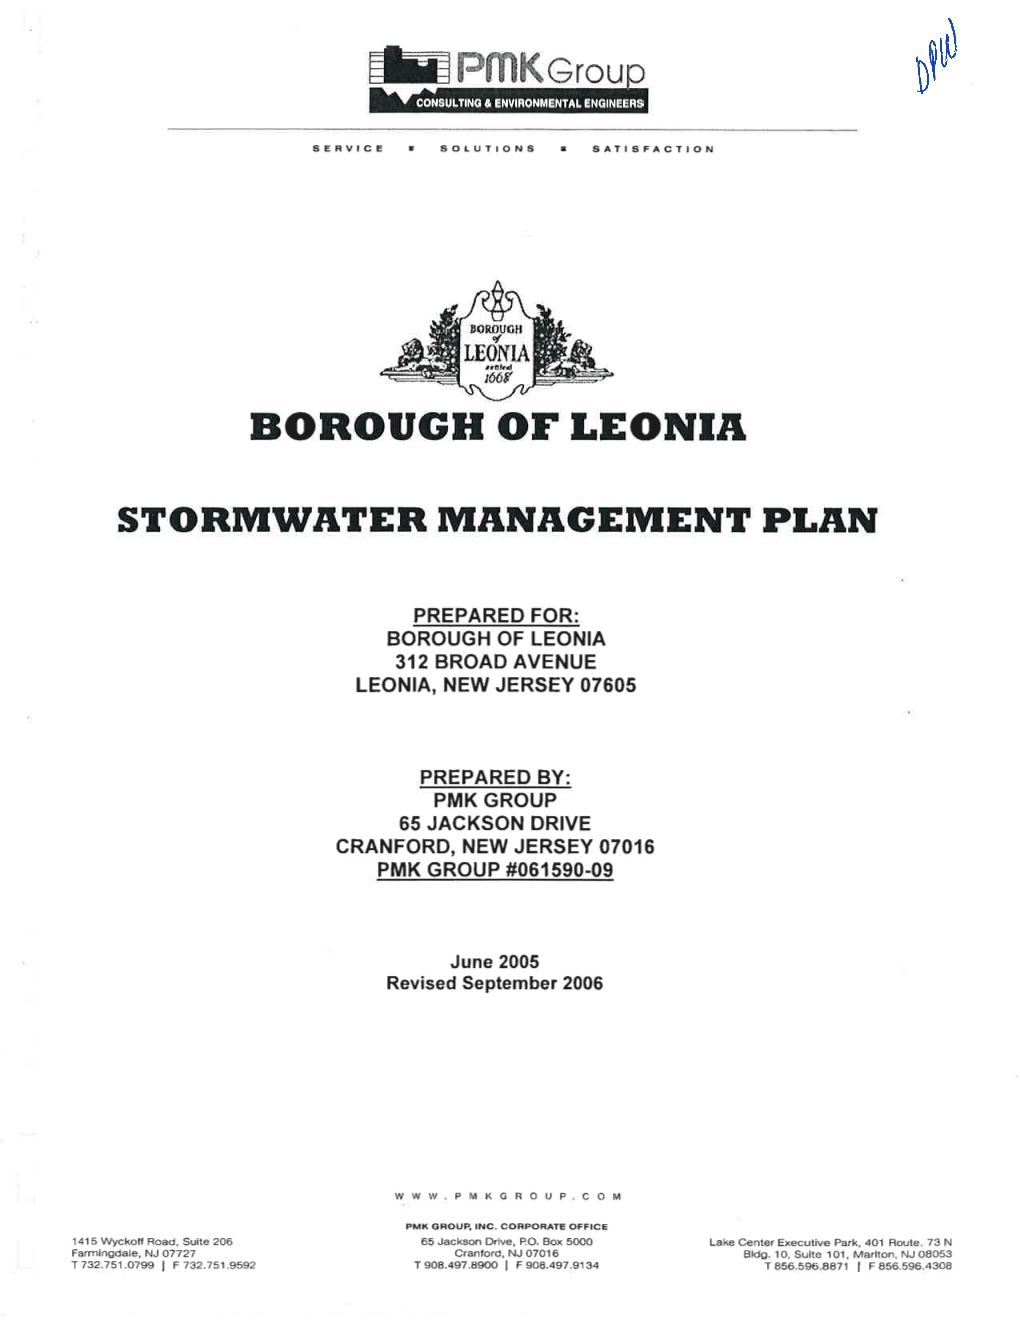 Leonia Stormwater Management Plan